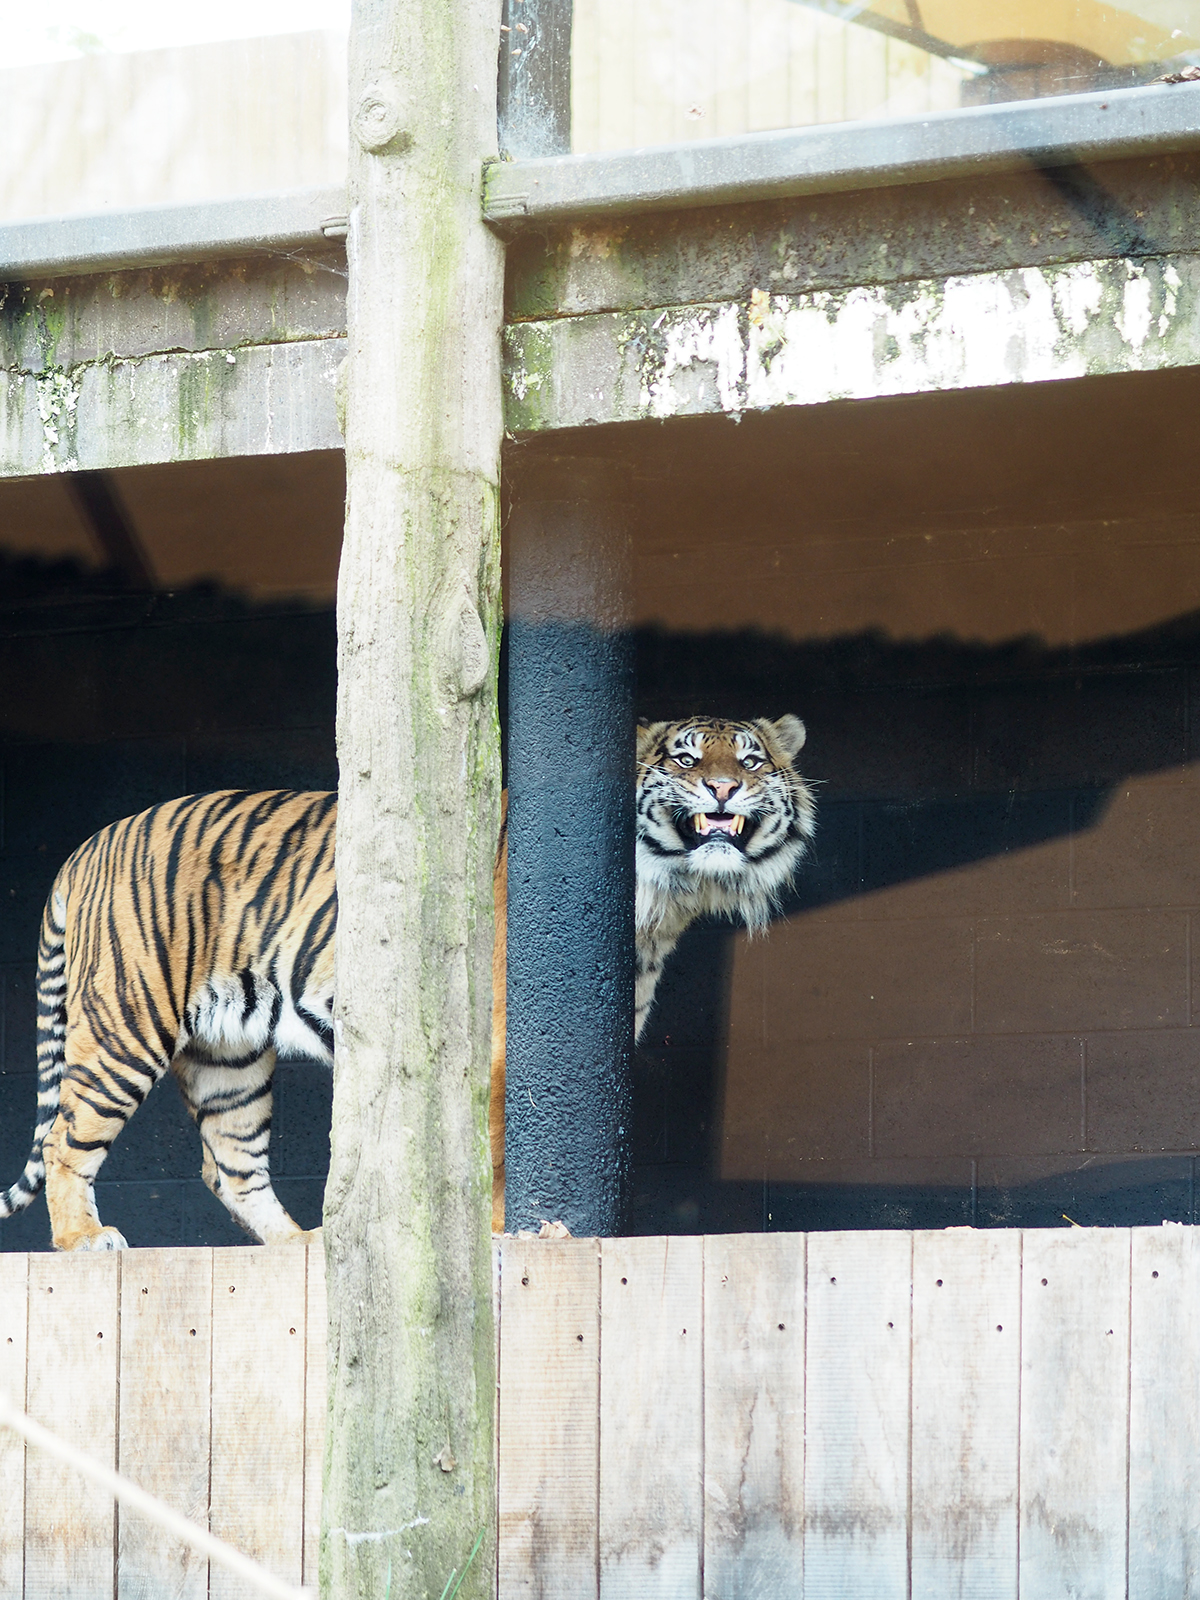 ZSL london zoo tigers